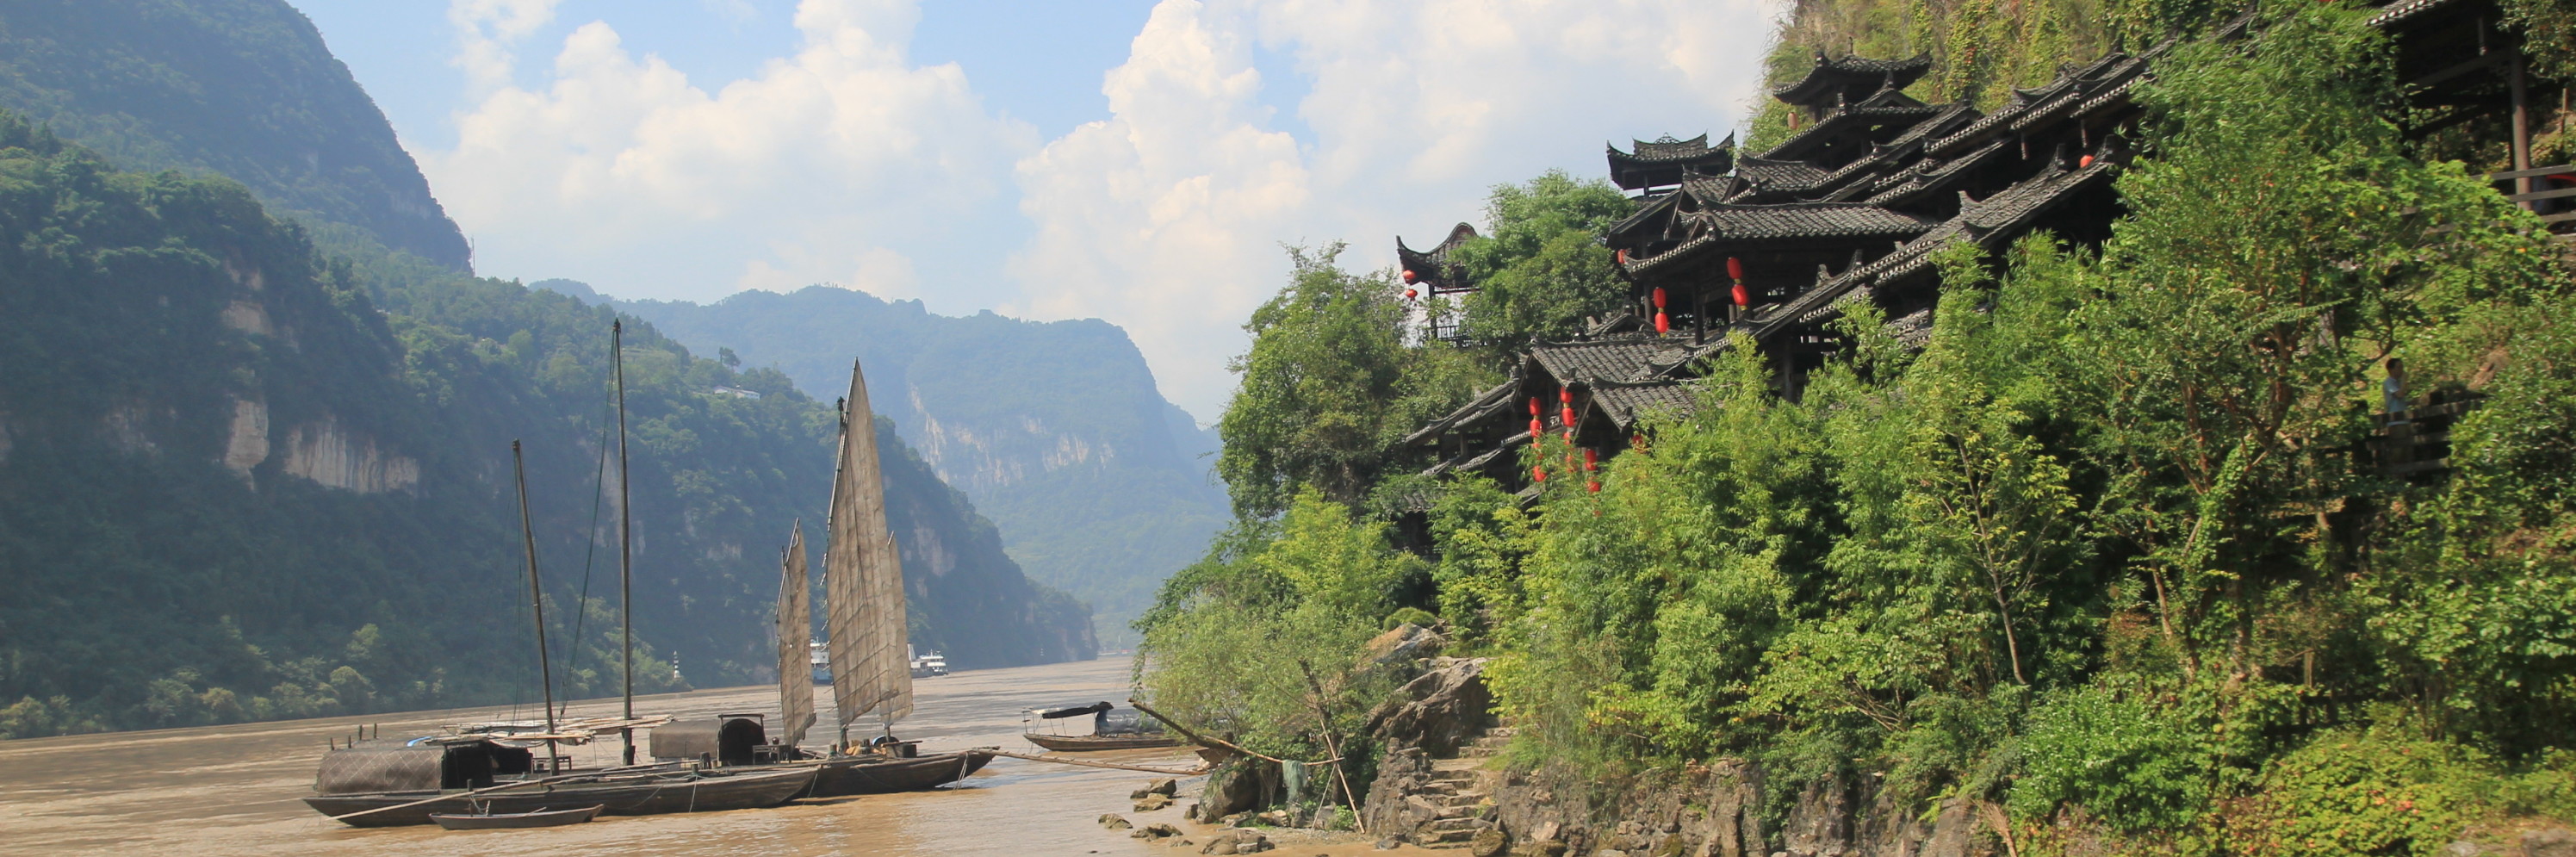 yangtze river sanxia tribe